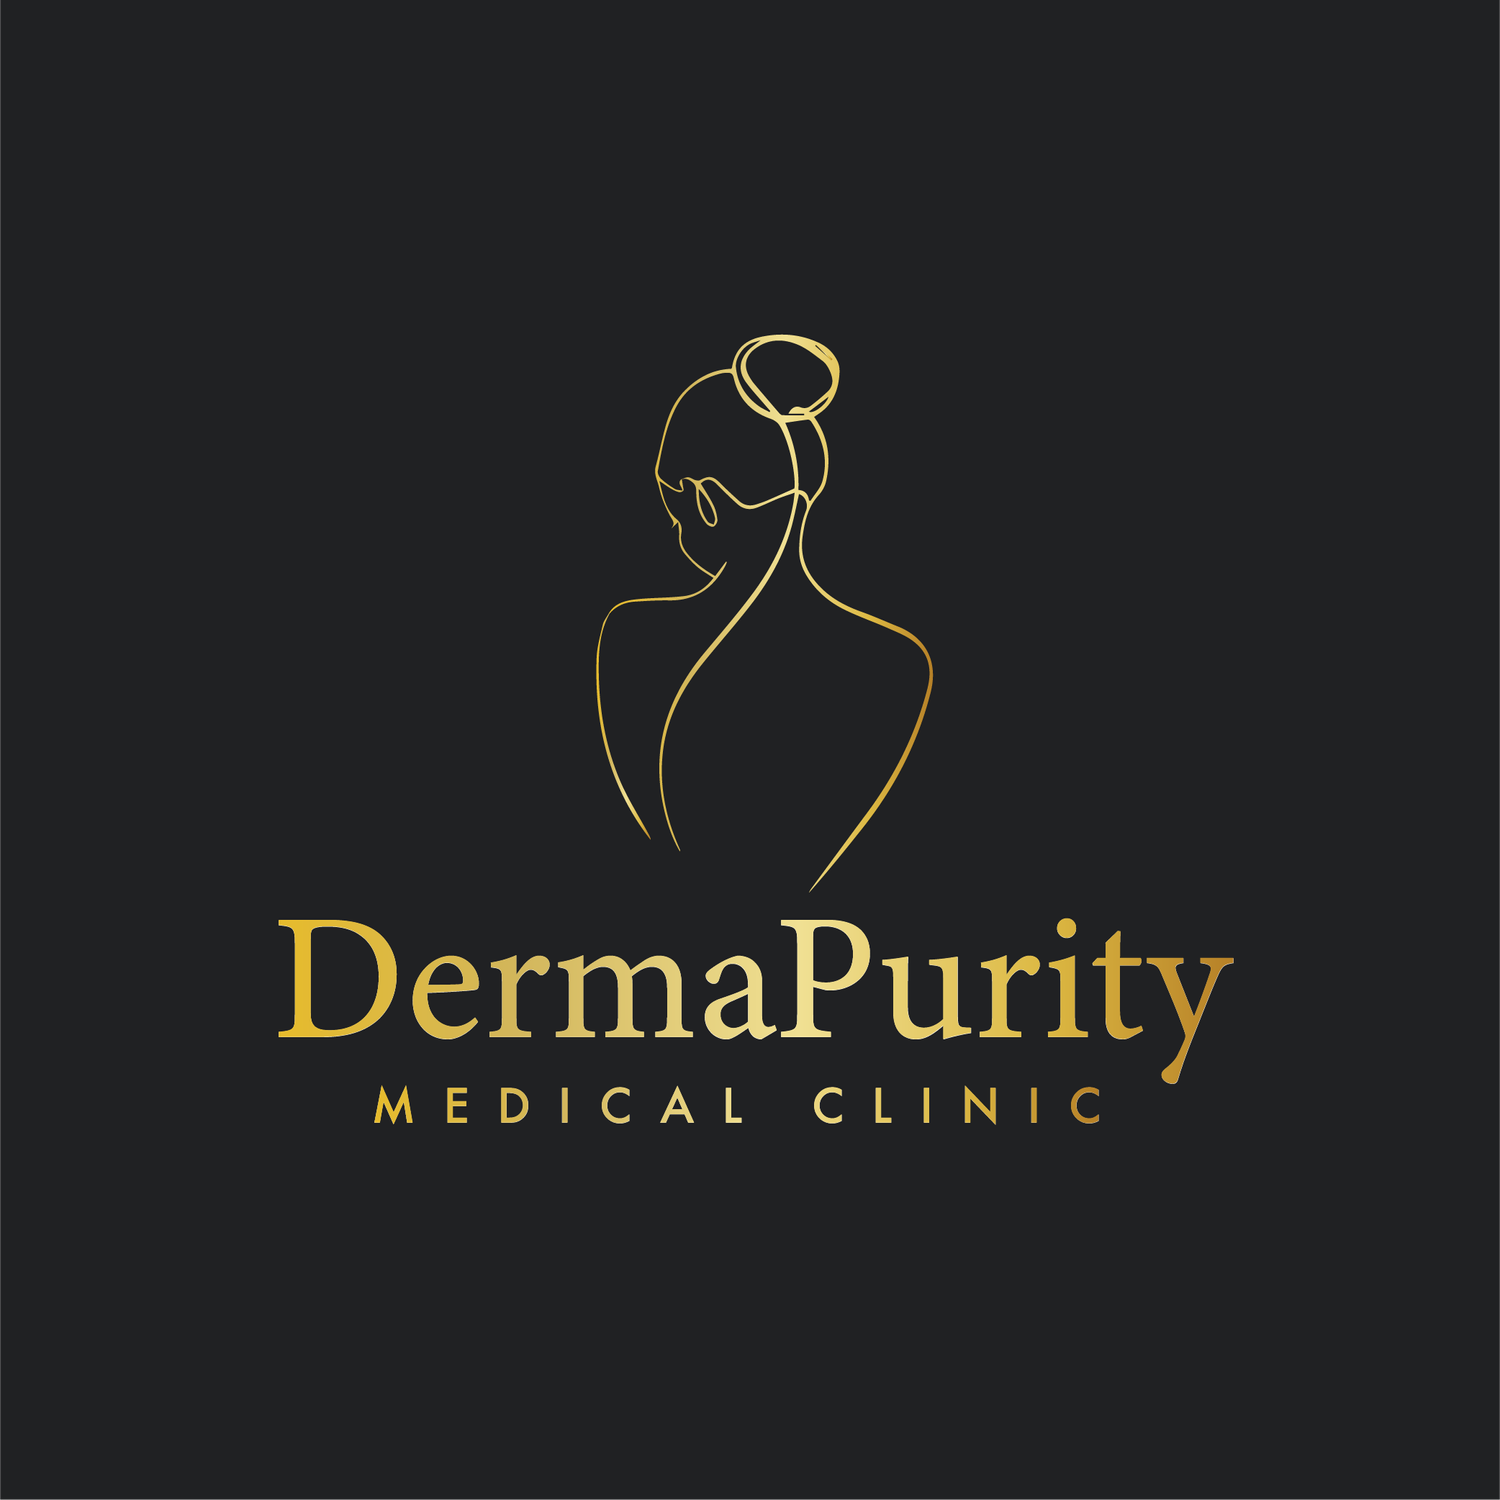 DermaPurity Medical Clinic